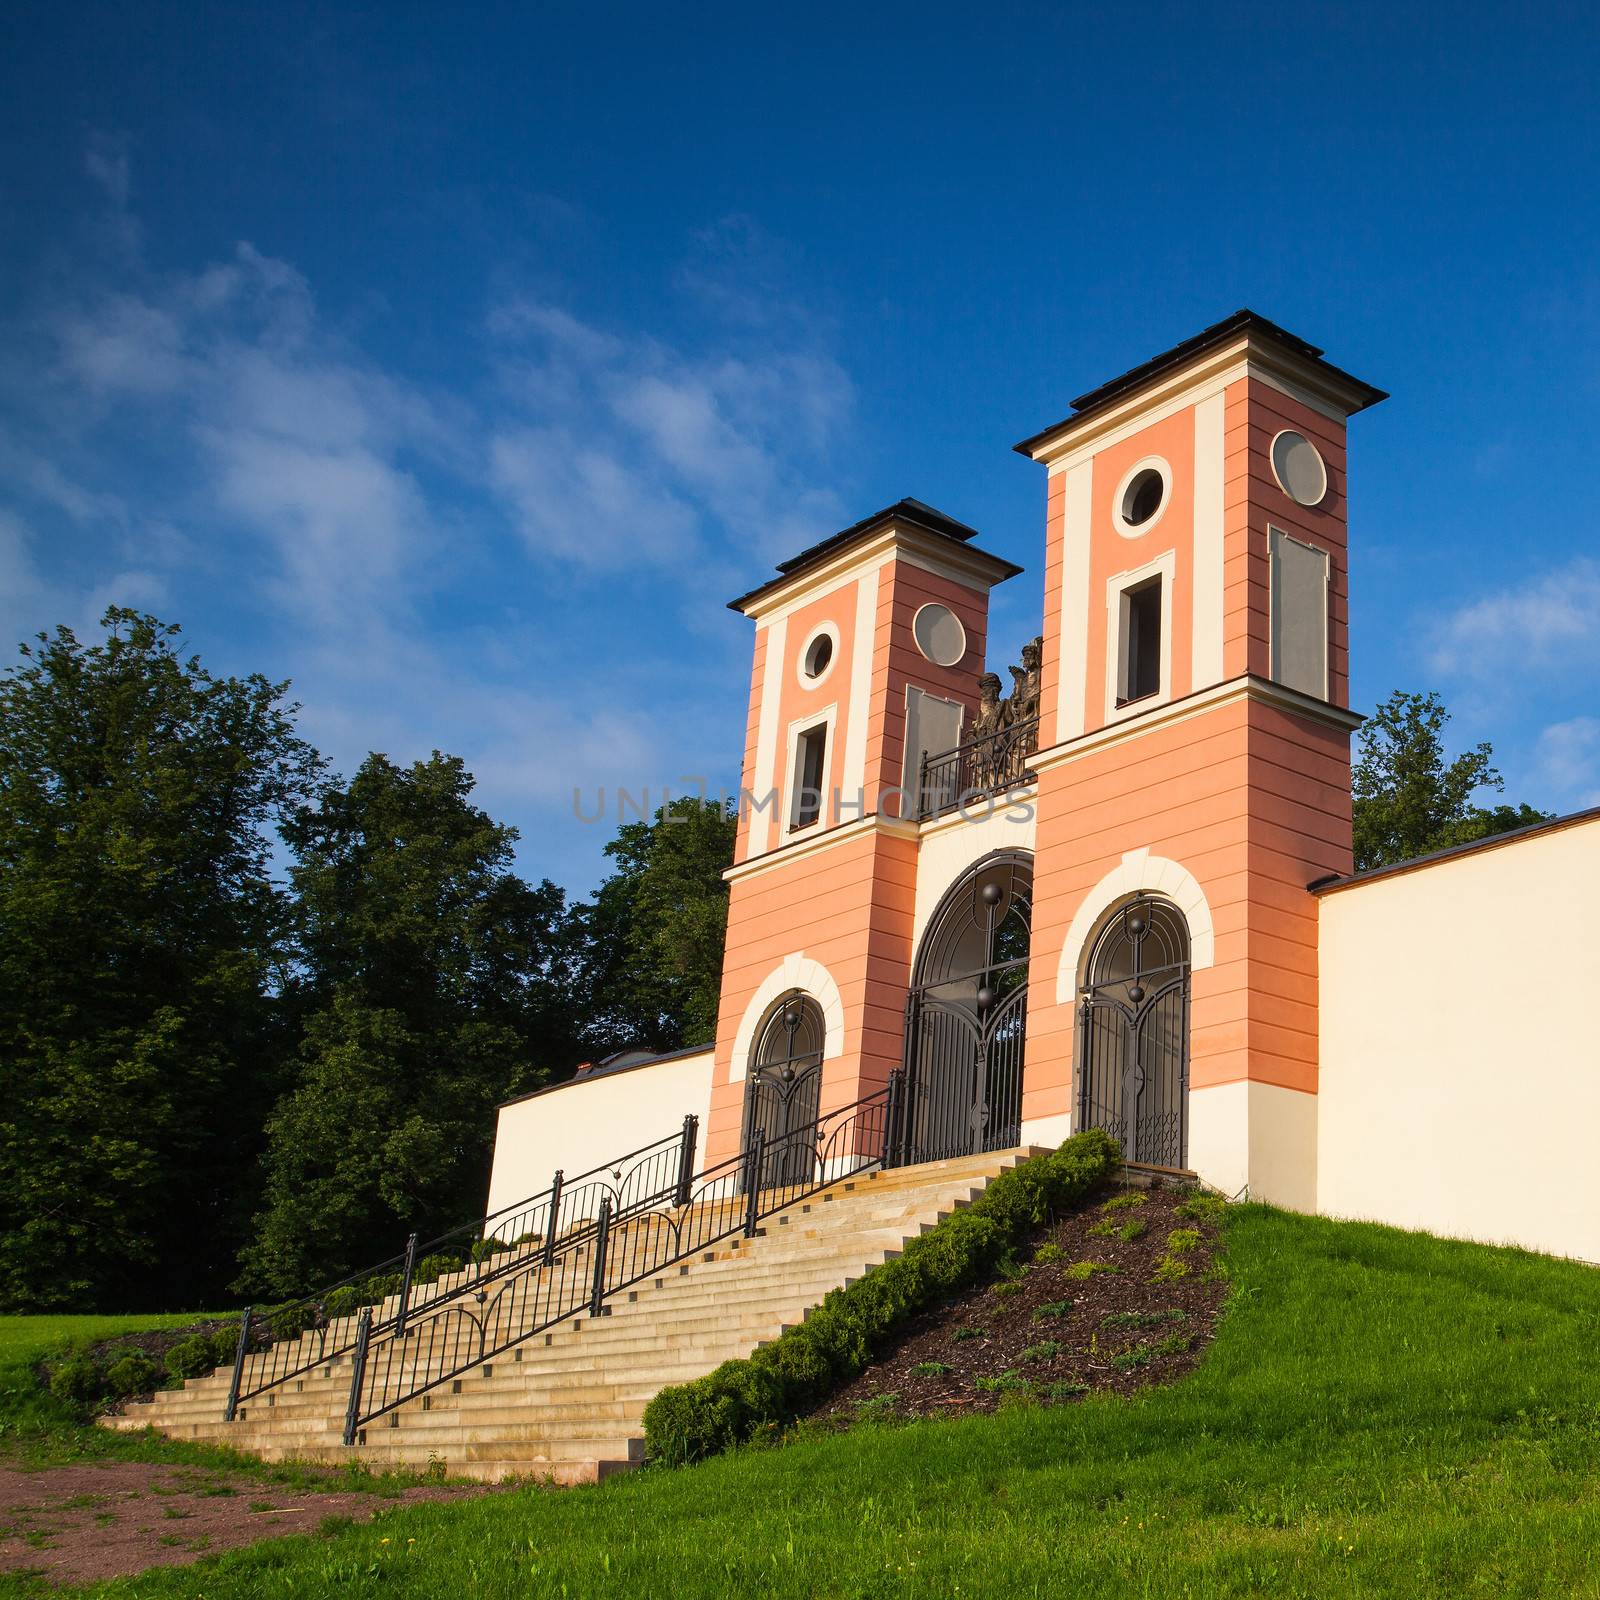 Place of pilgrimage in Jaromerice u Jevicka by CaptureLight